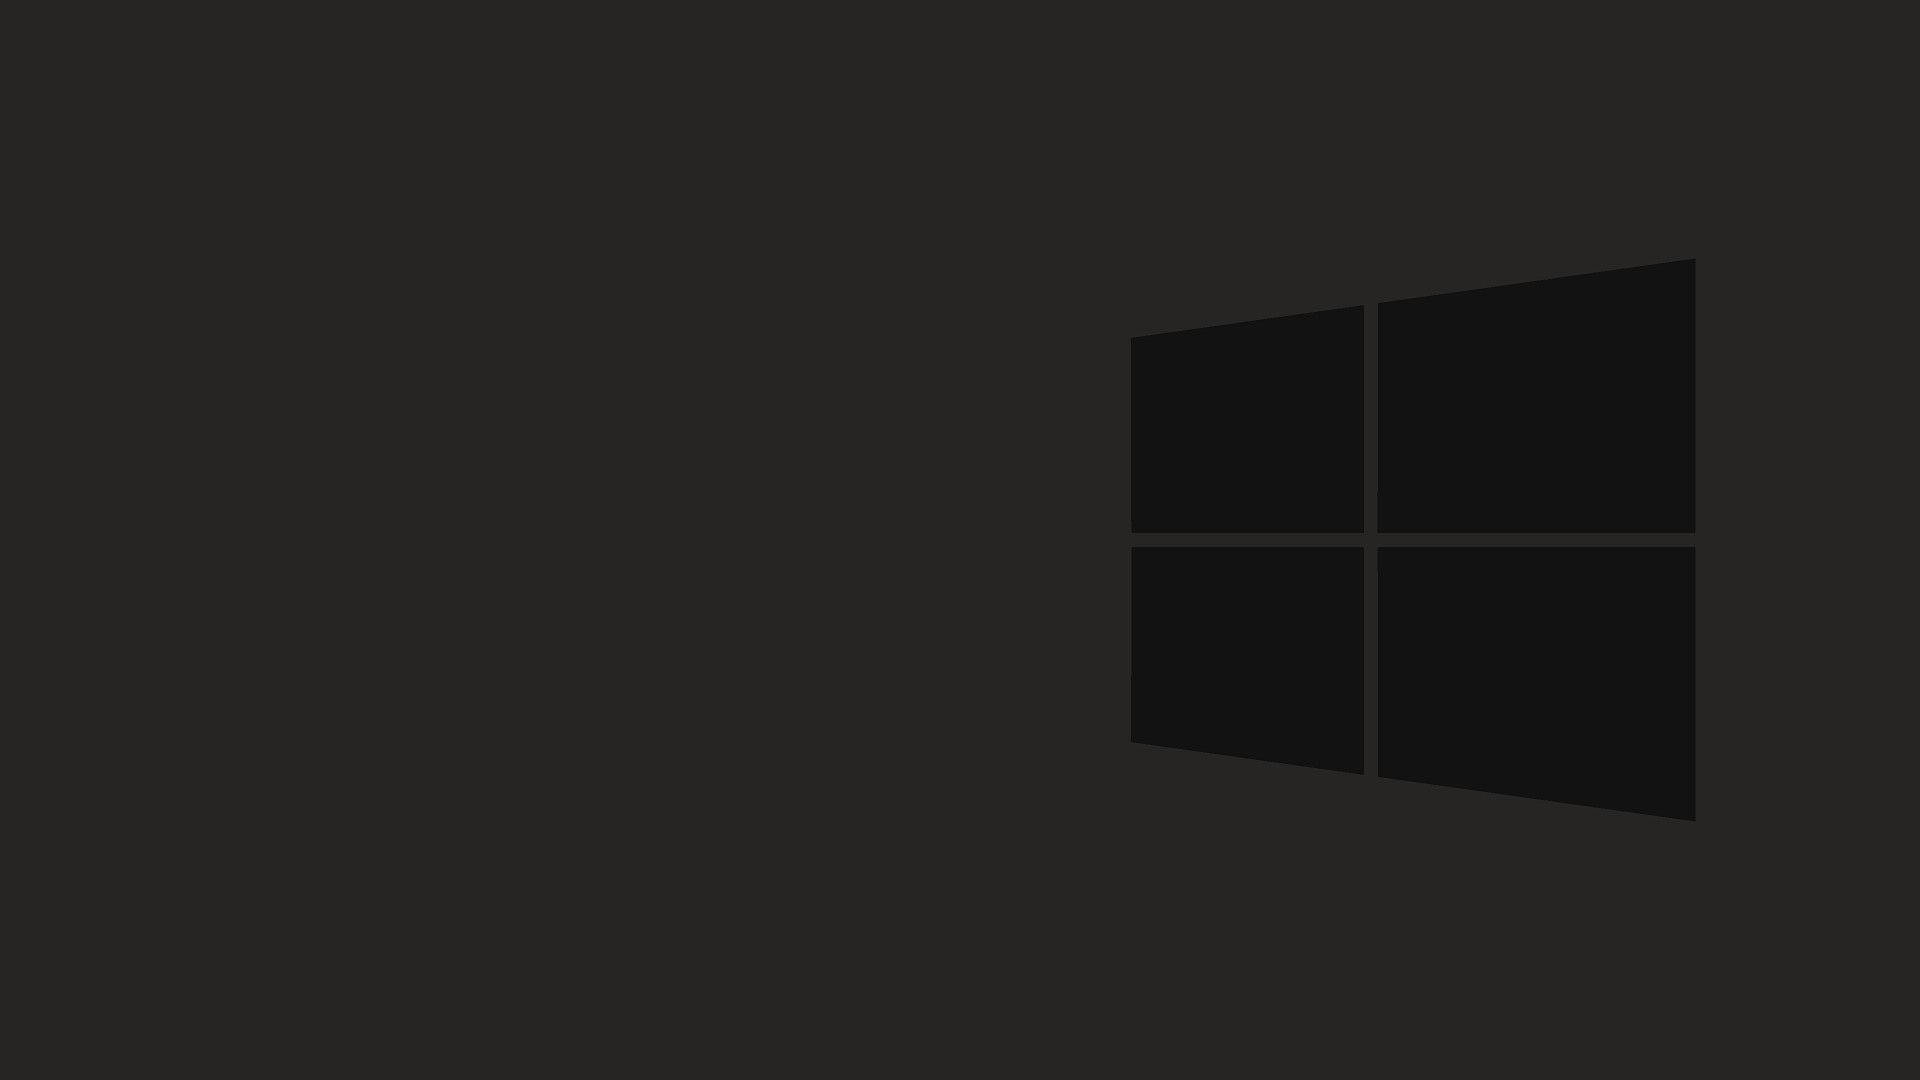 Black Windows 10 Hd On Gray Background